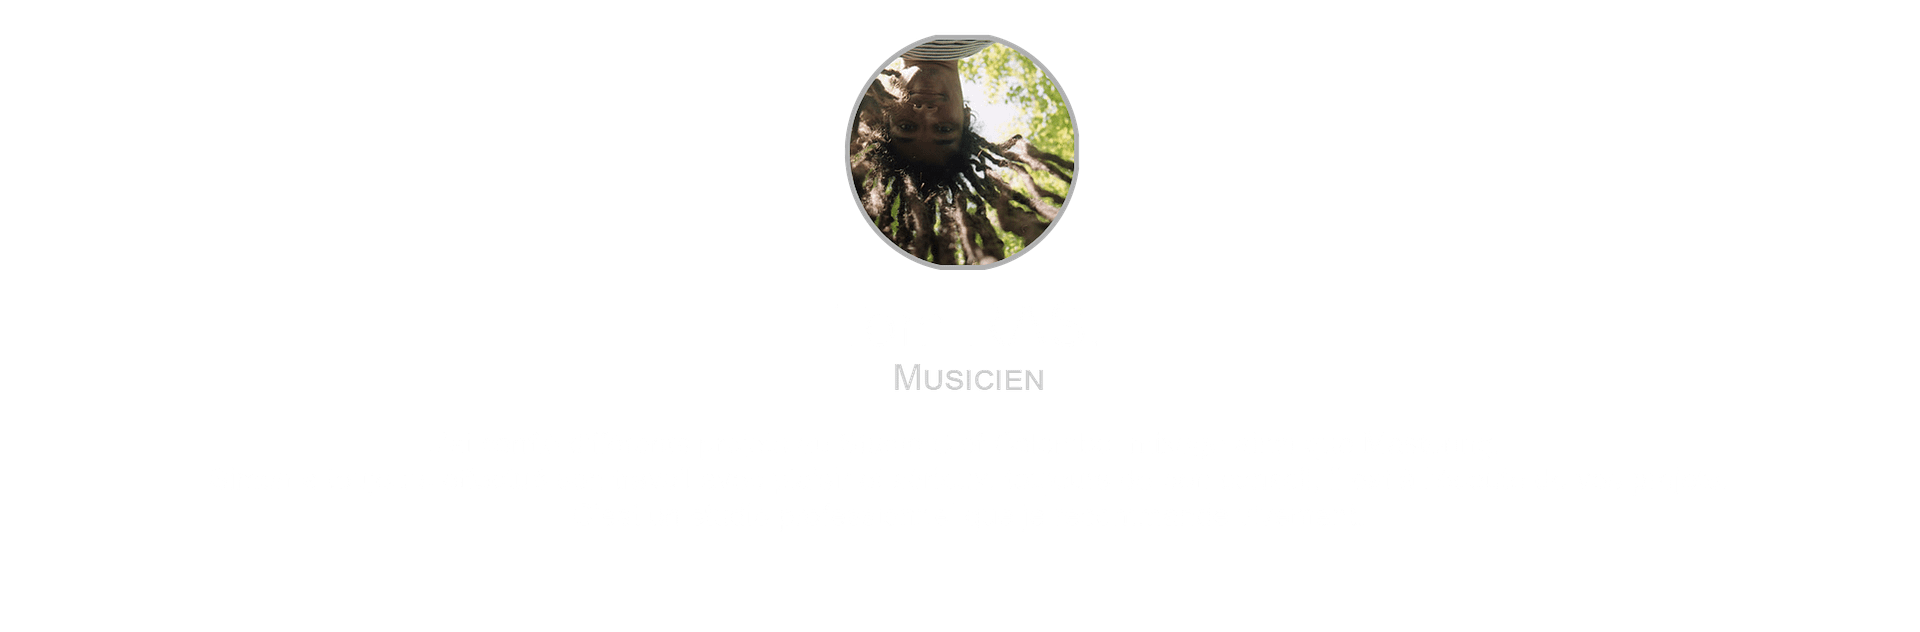 Tom-RAS